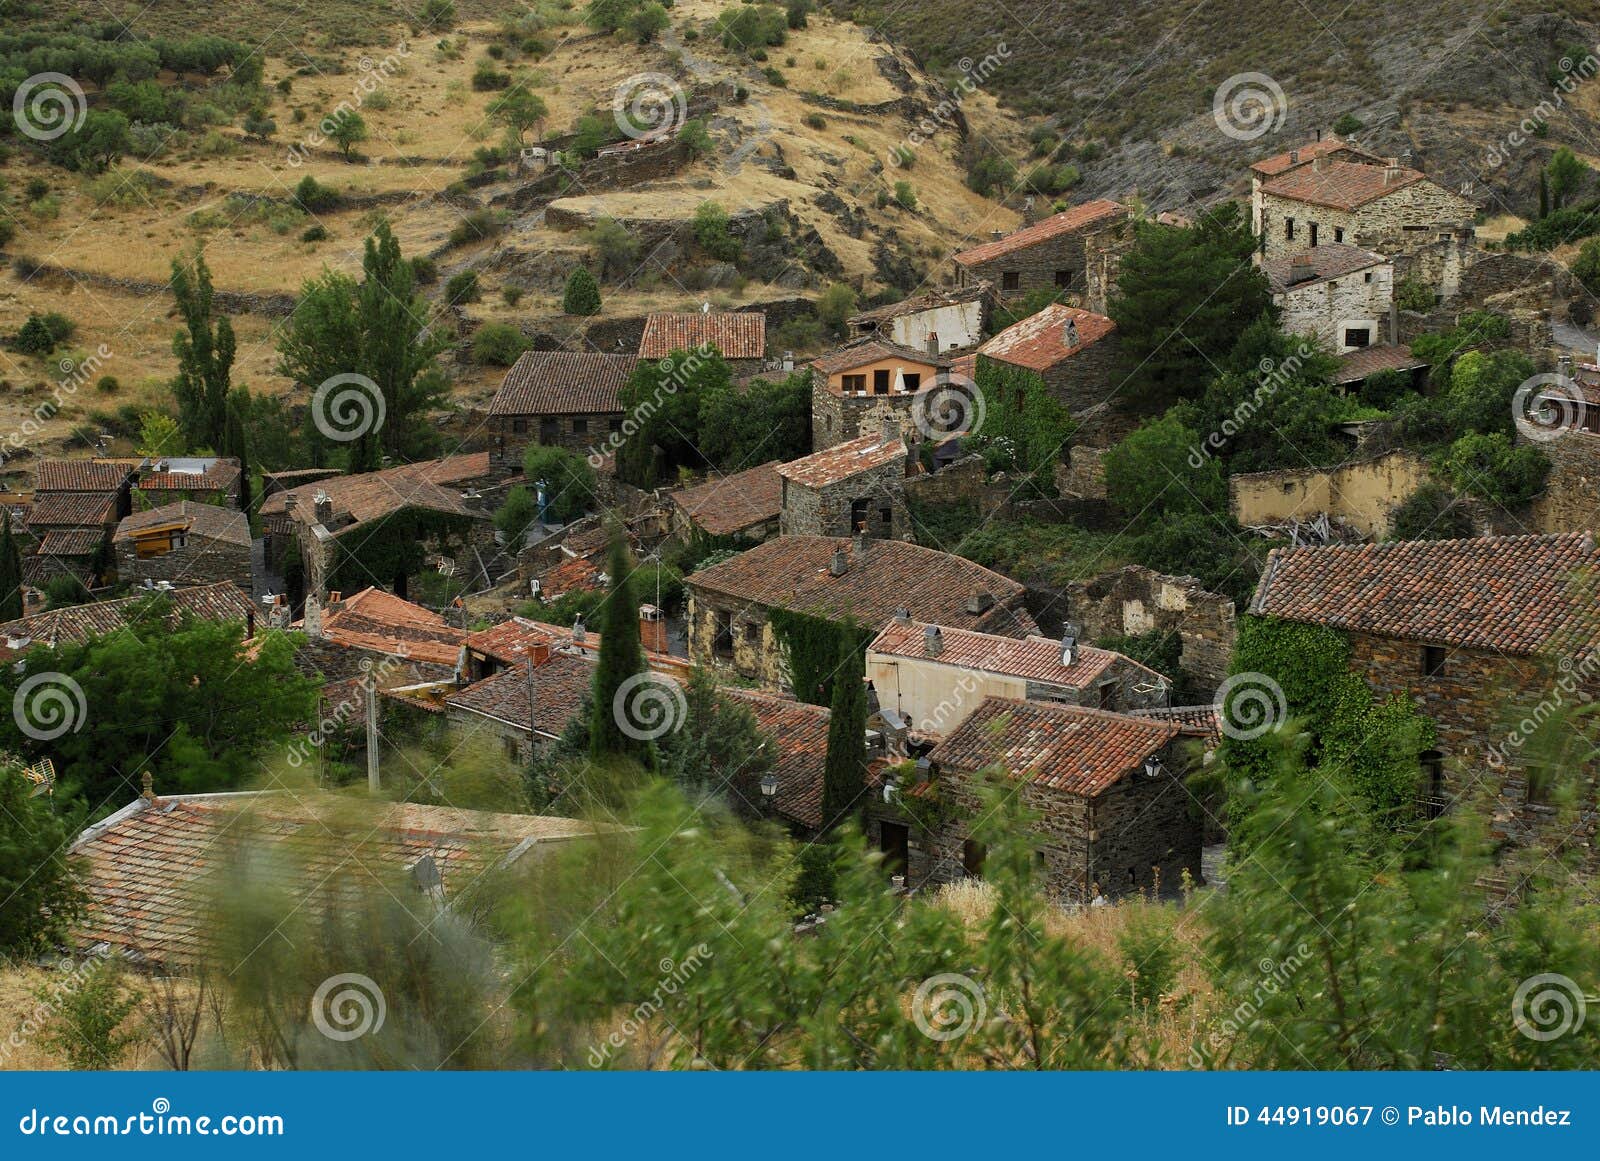 view of patones de arriba town, madrid, spain